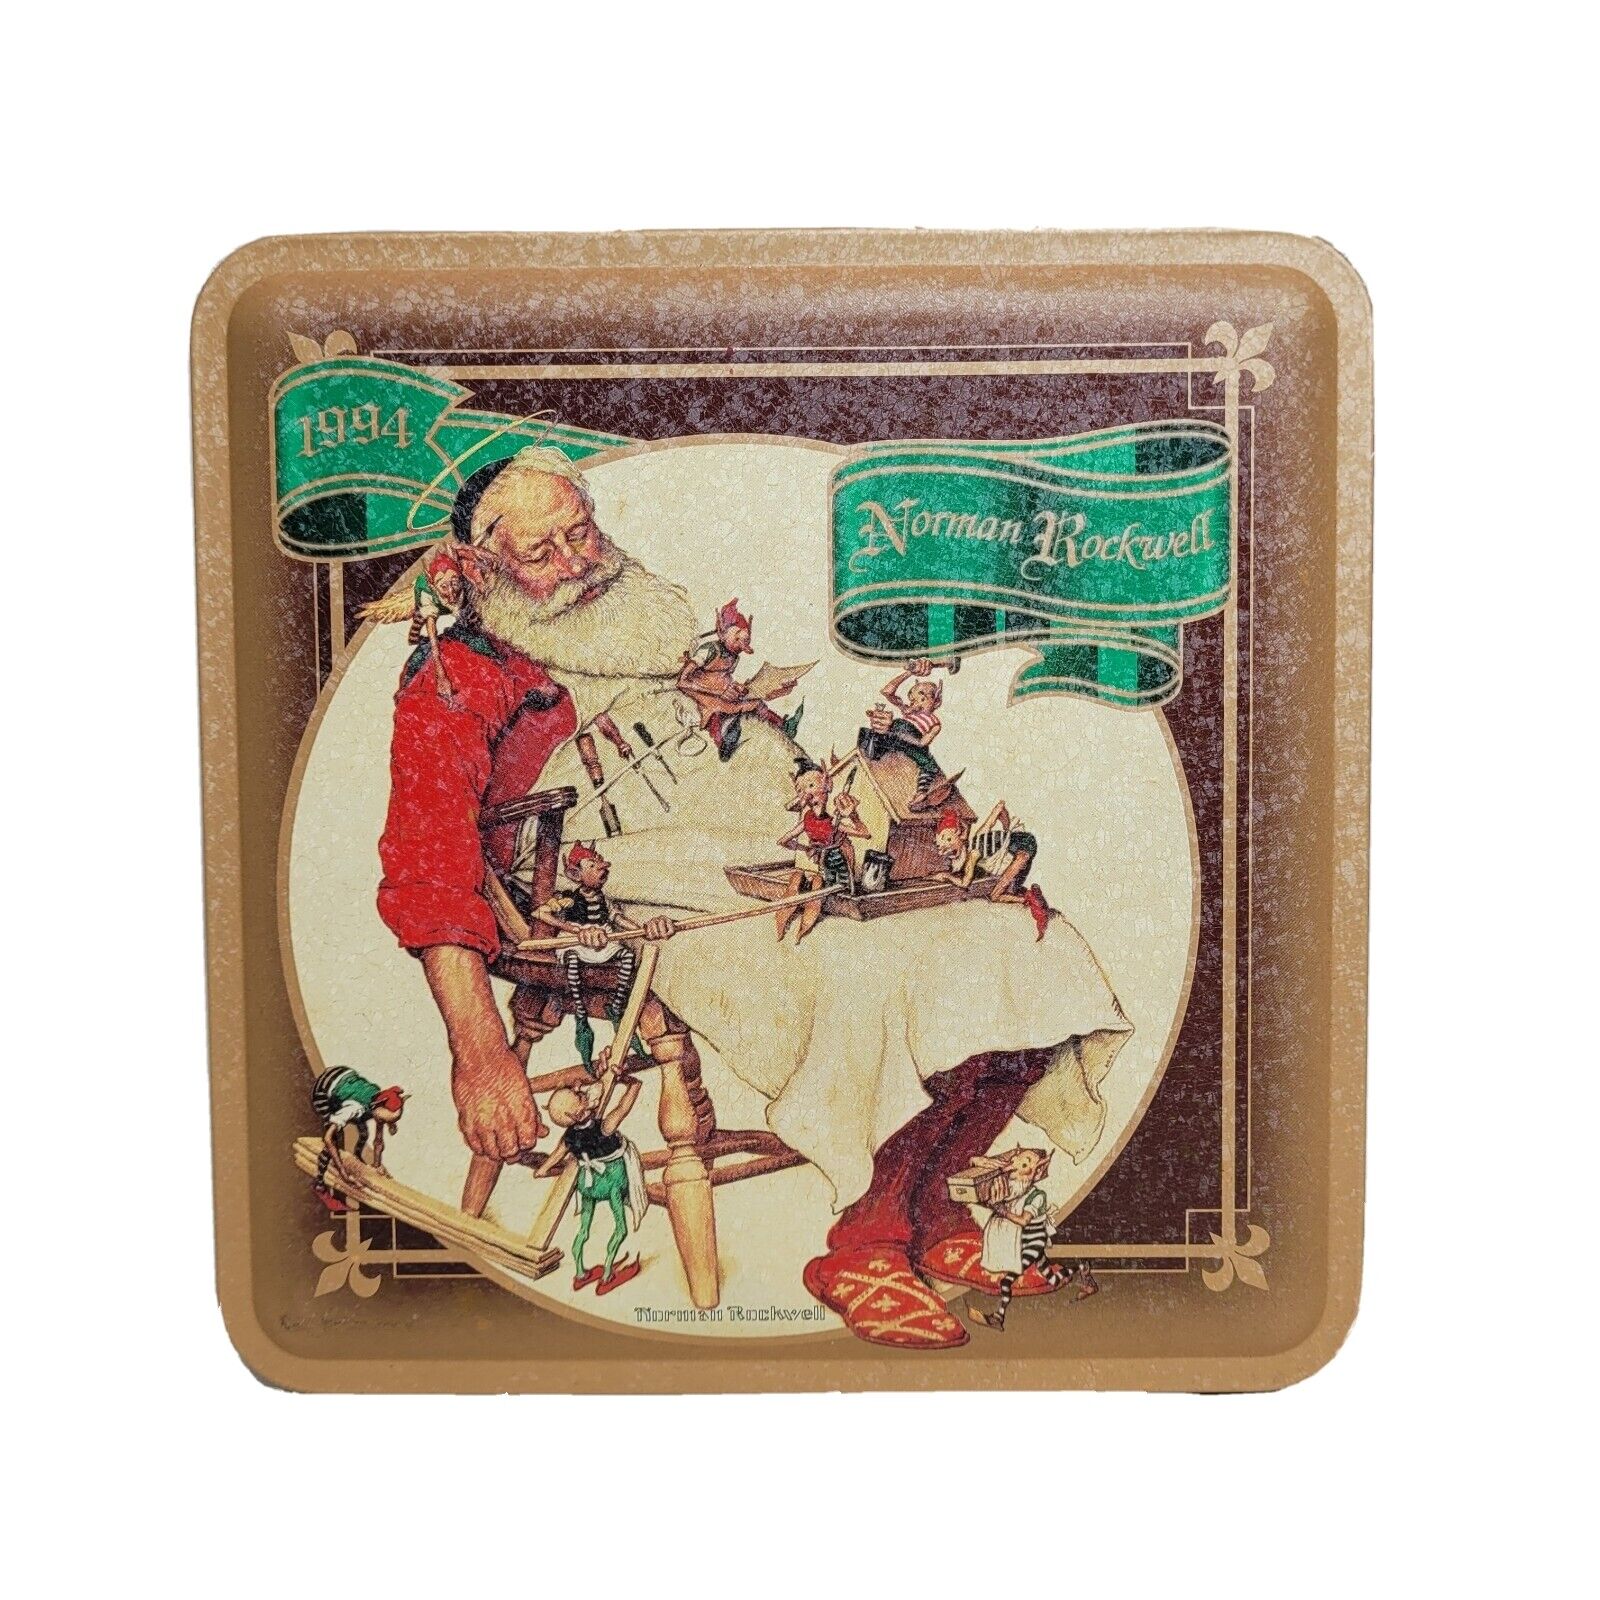 1994 Norman Rockwell Santa Claus Christmas Snickers Tin, Hallmark collectible 